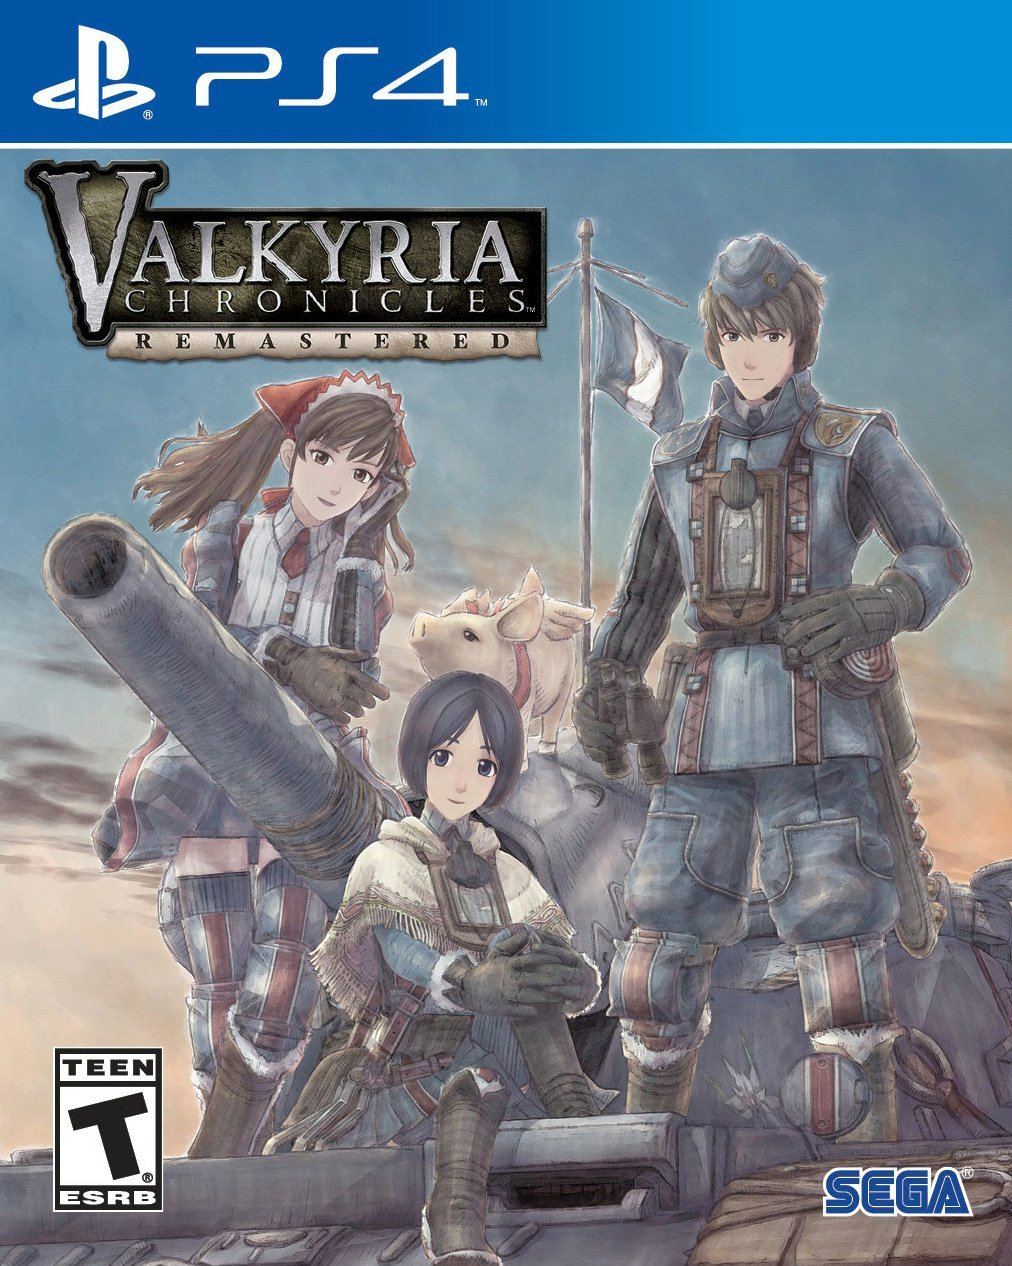 Regulering Settlers vedholdende Valkyria Chronicles Remastered for PlayStation 4